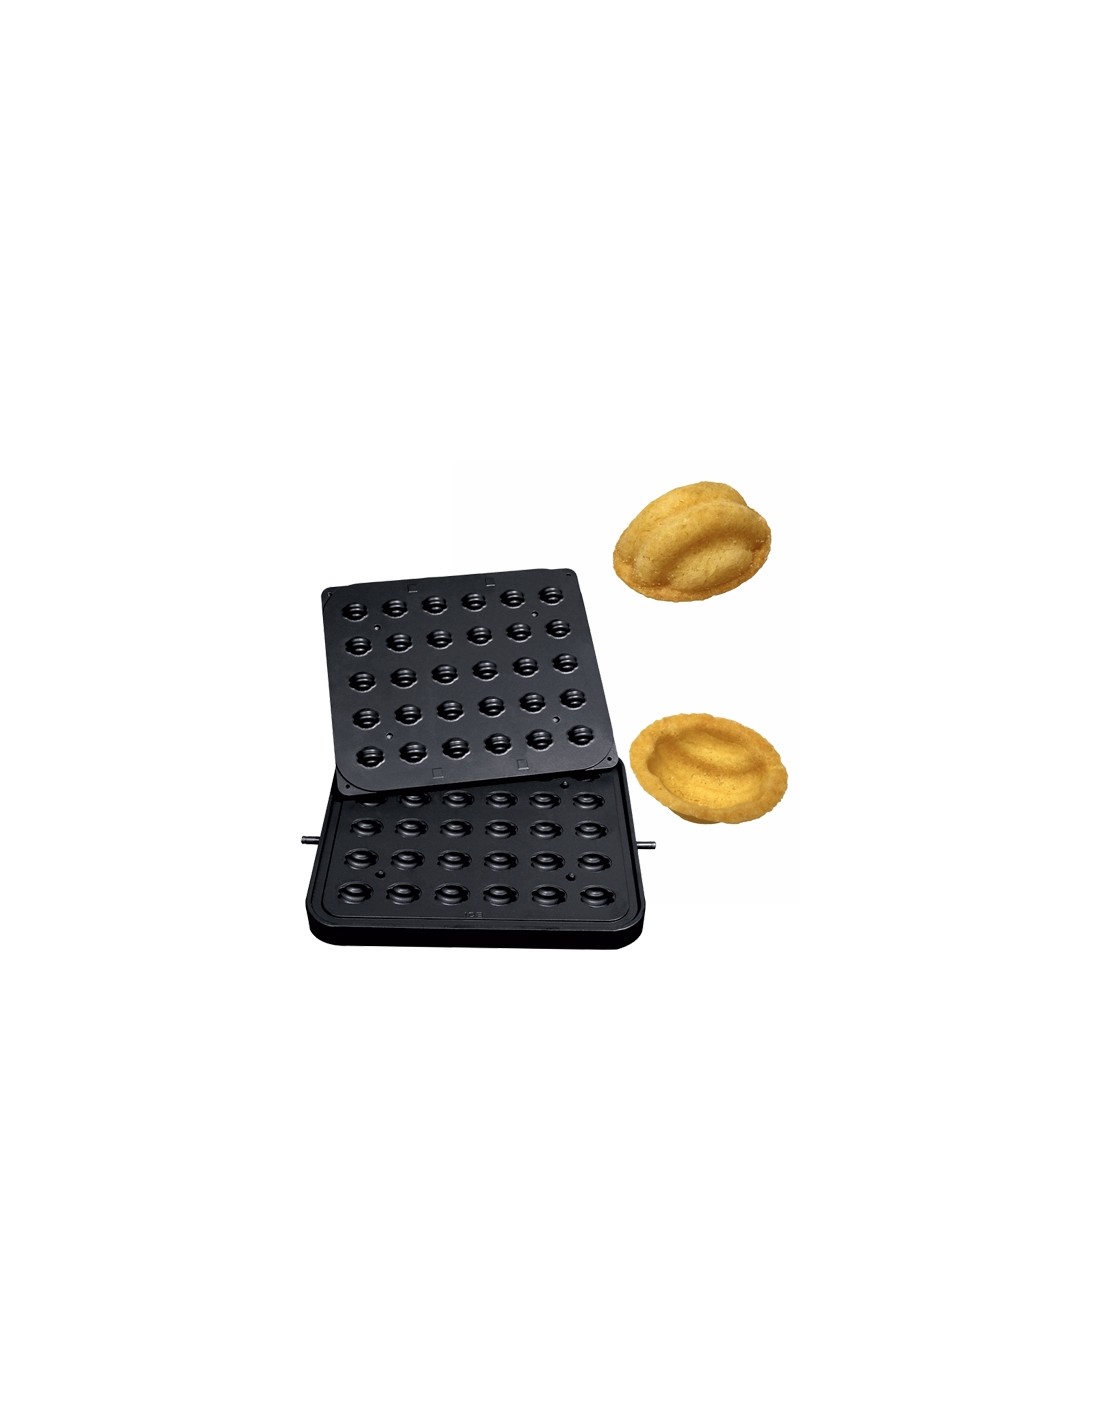 Plate walnut - mm Ø sup 42 x 35 - h 18 - side 3.5 - bottom 3.5 - Improper 30